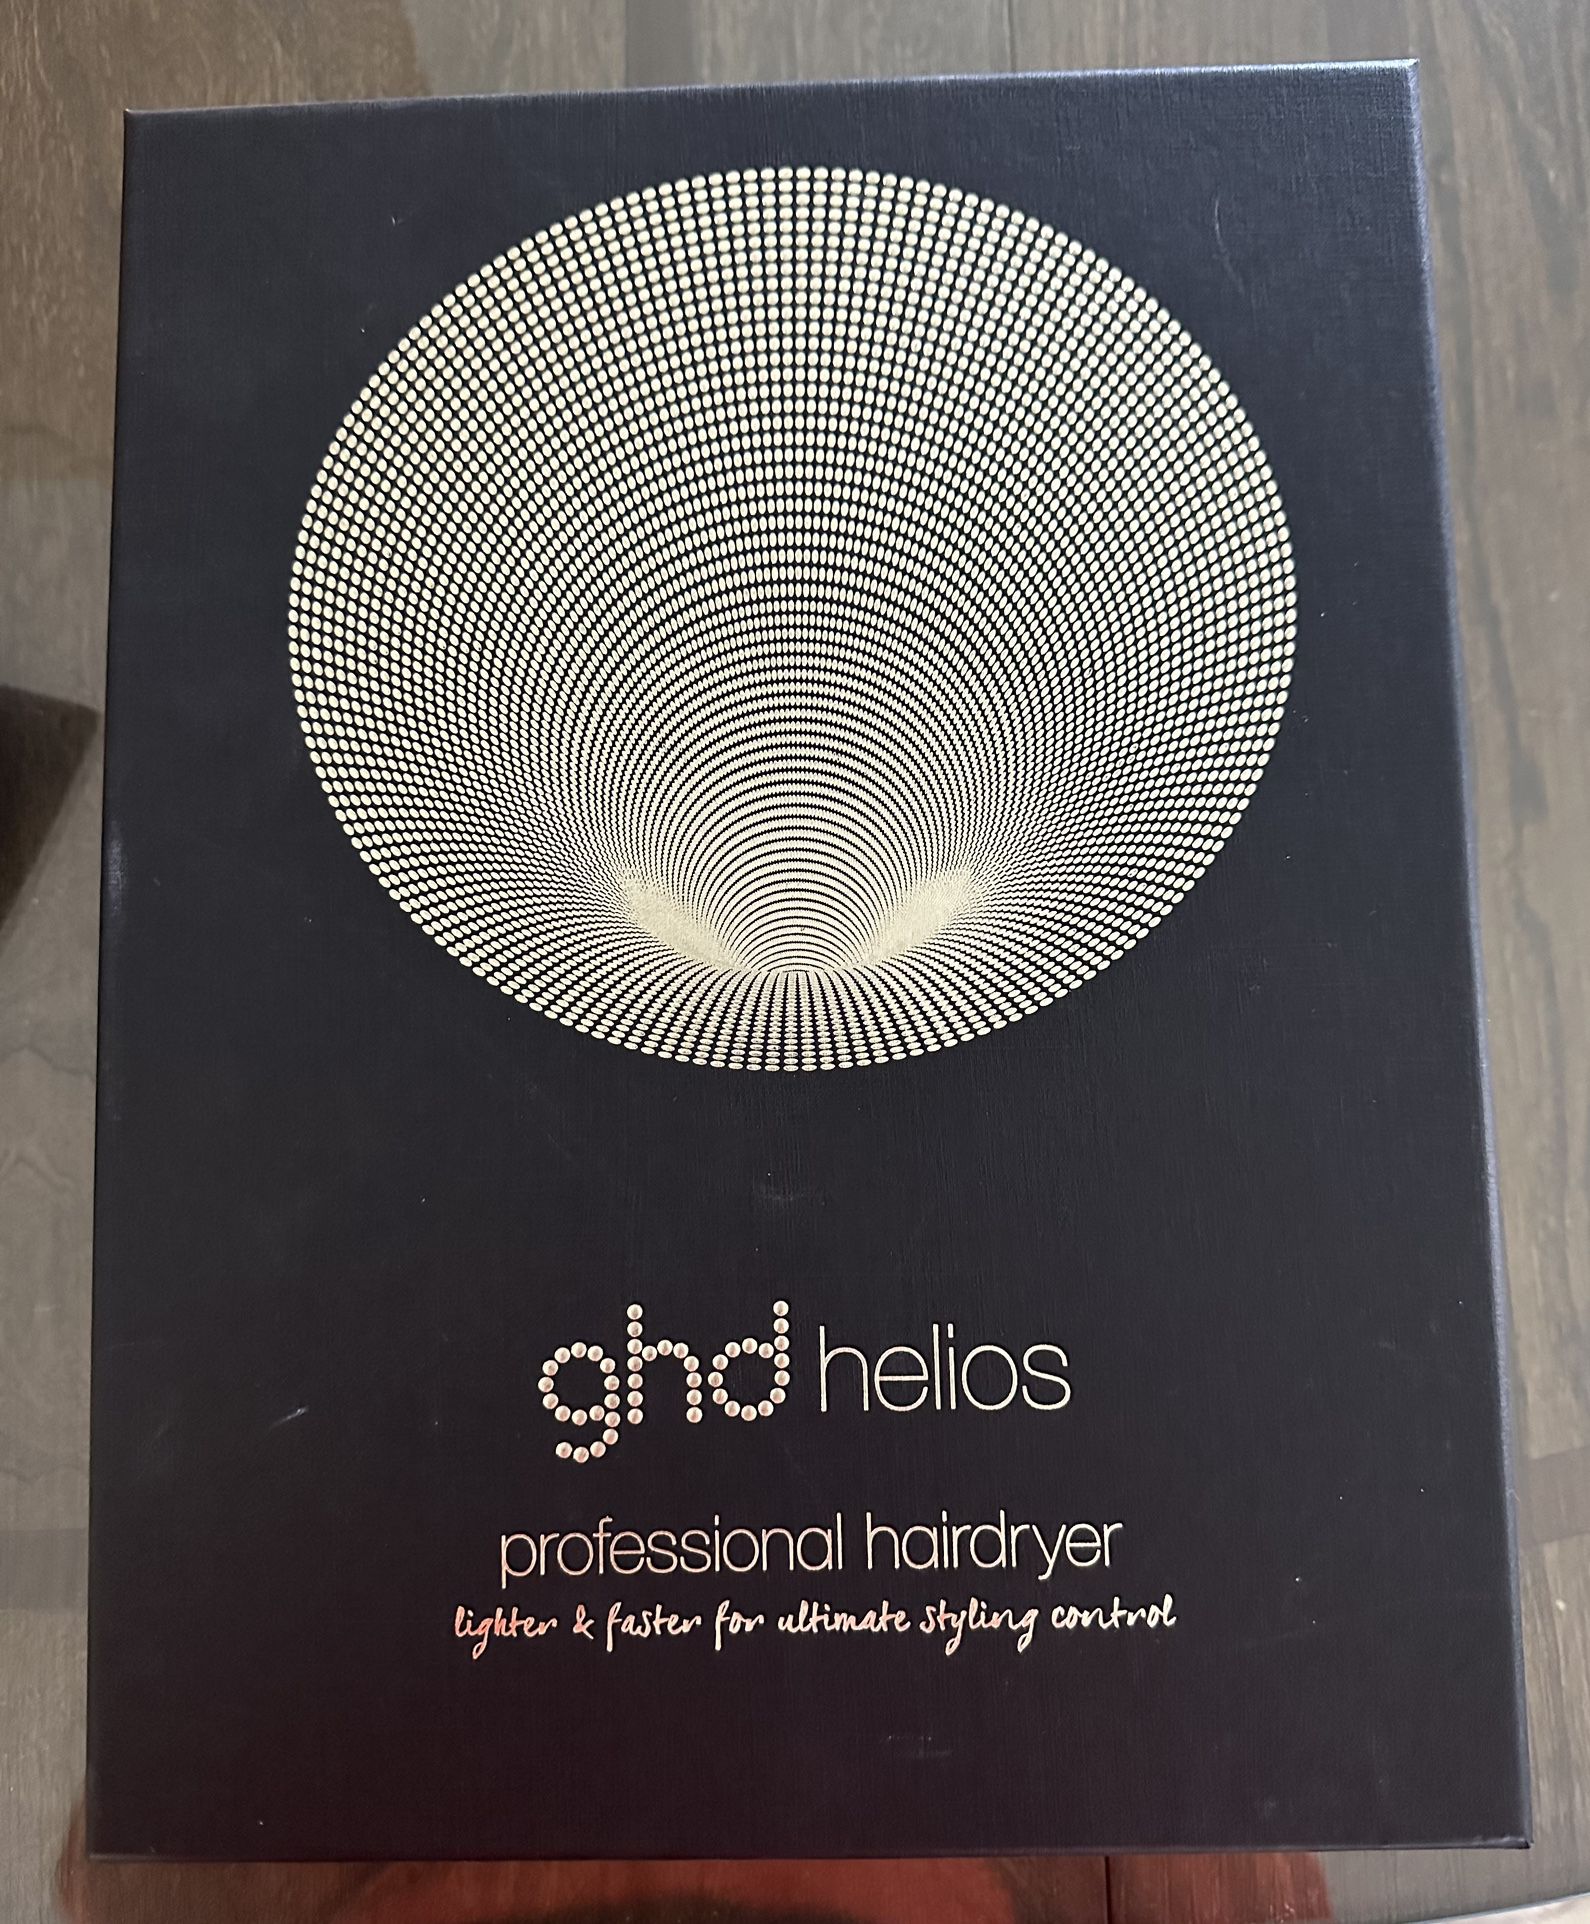 ghd Helios Professional Hairdryer